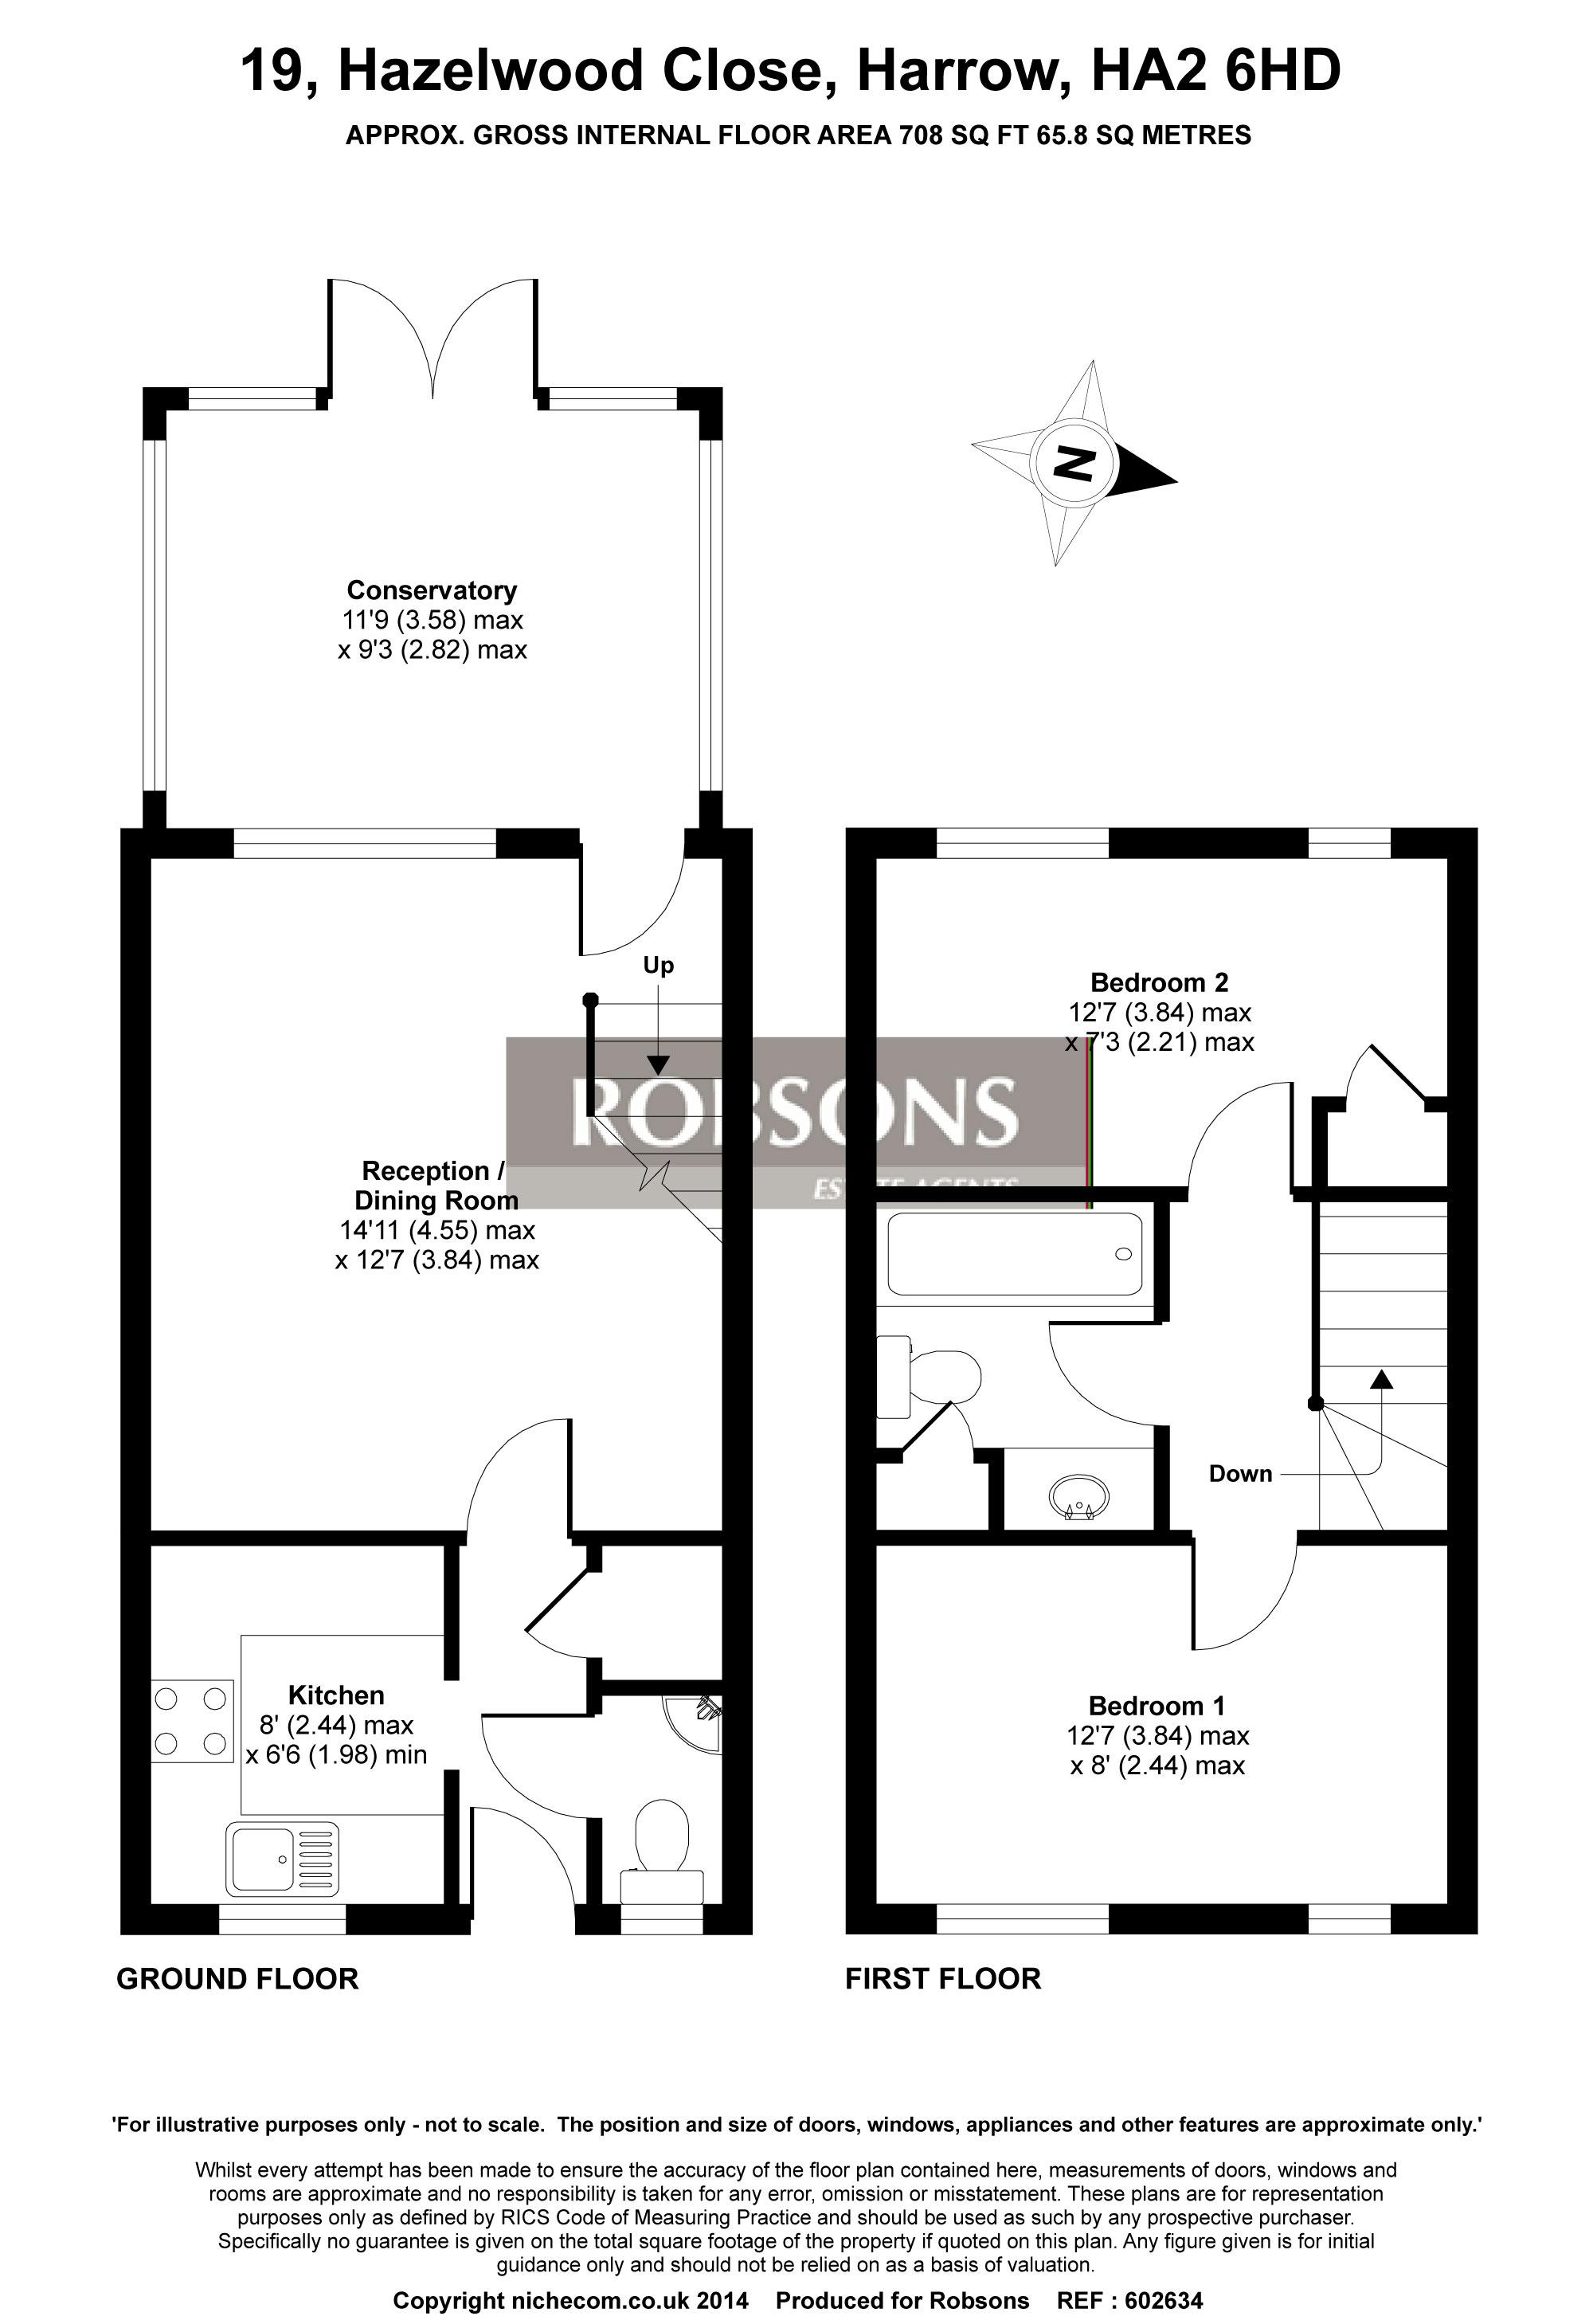 2 Bedrooms Semi-detached house to rent in Hazelwood Close, Harrow HA2